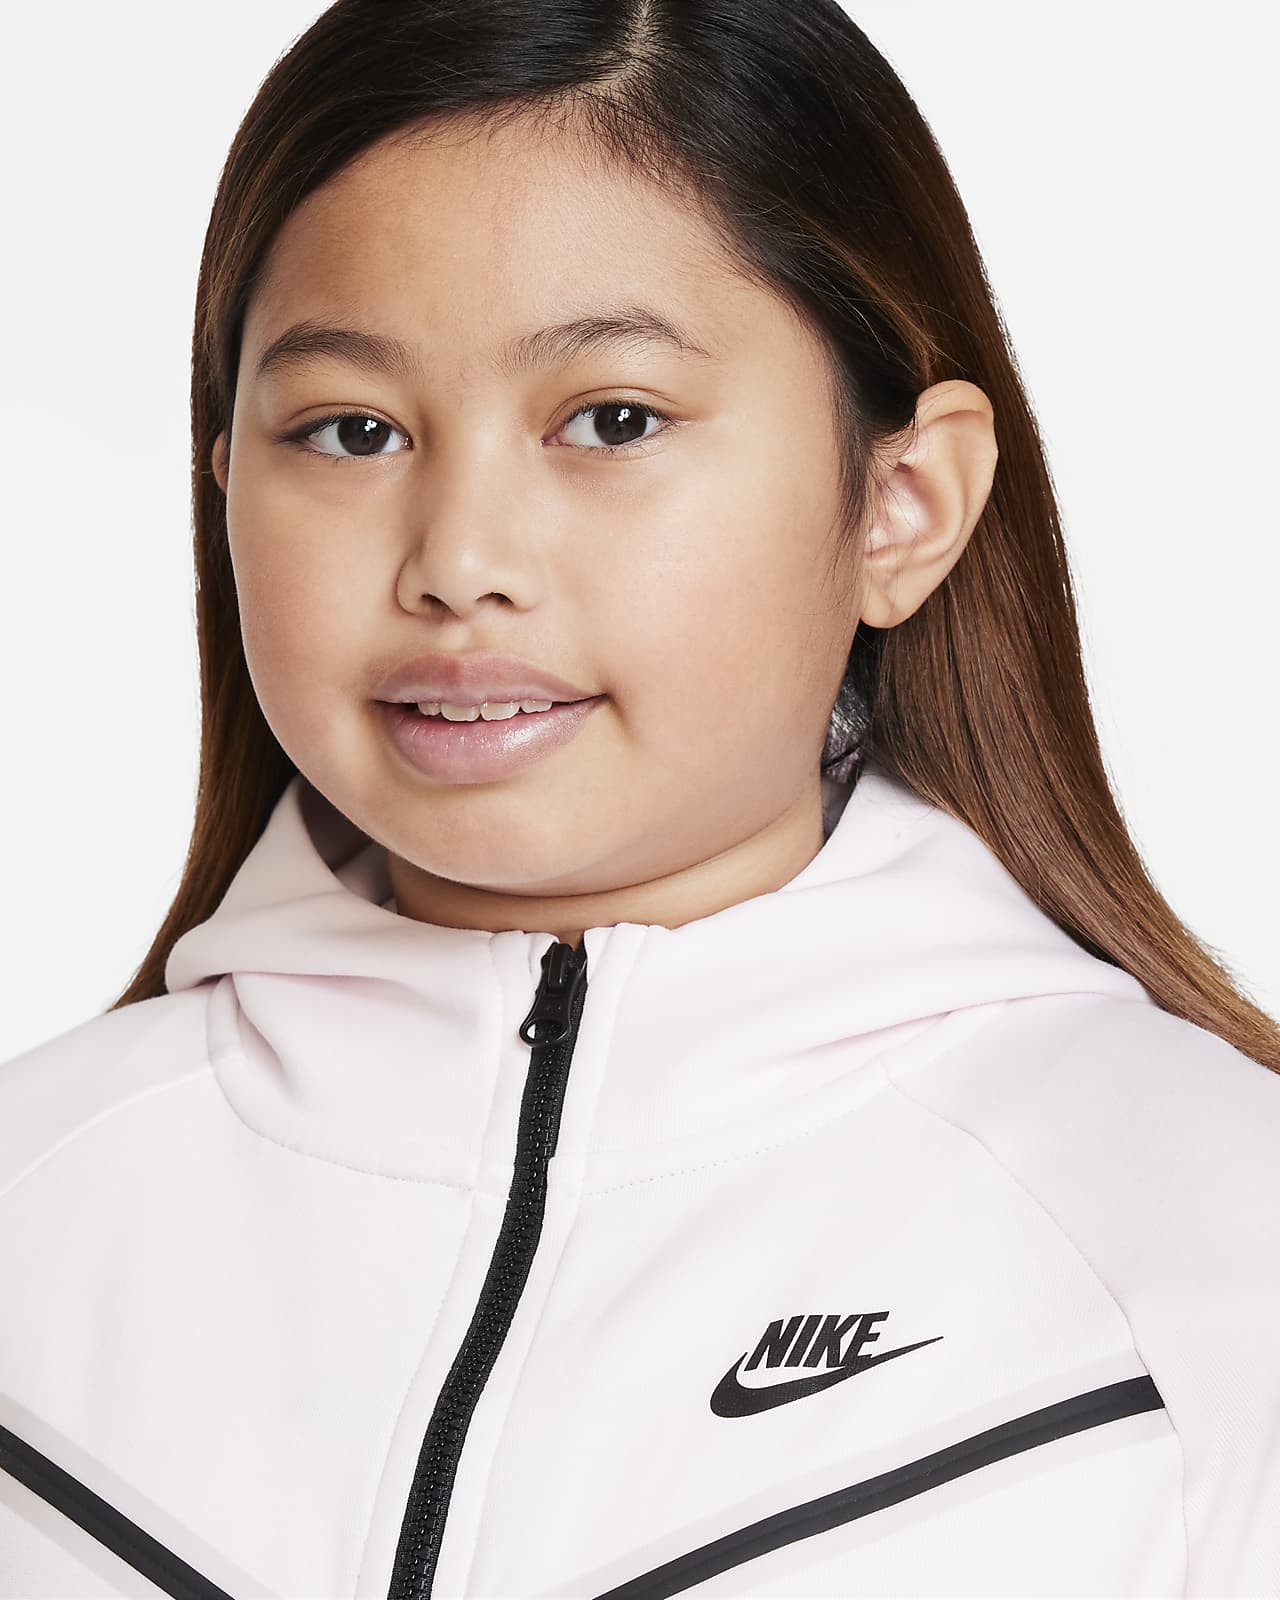 Nike Nike Girl's Tech Fleece Team USA Big Kids' Jacket 826871 473